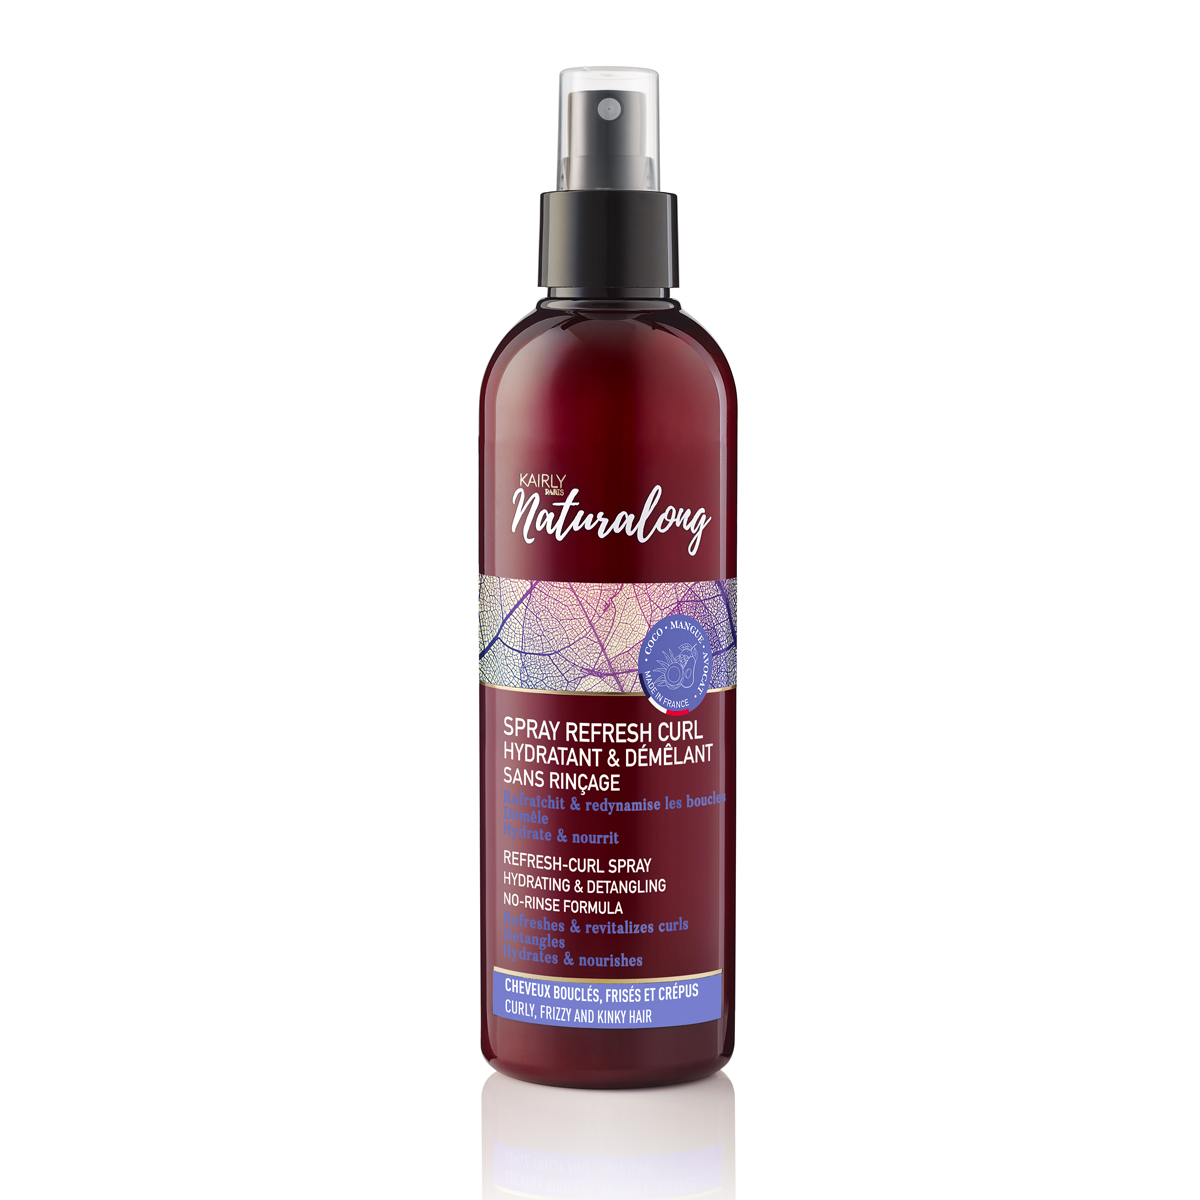 Spray Refresh Curl  Hydratant et Dmlant sans rinage | NATURALONG